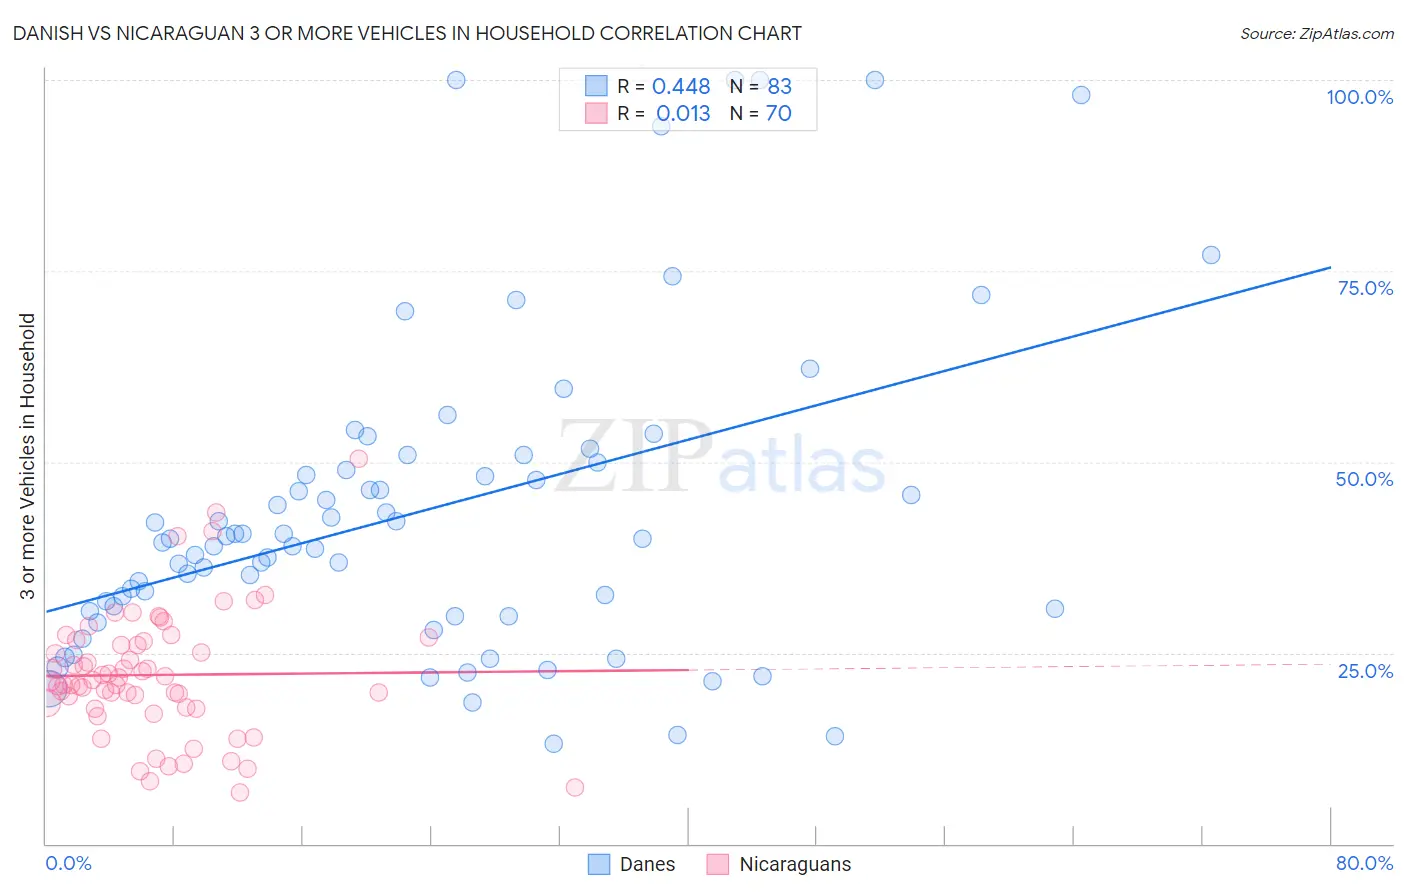 Danish vs Nicaraguan 3 or more Vehicles in Household